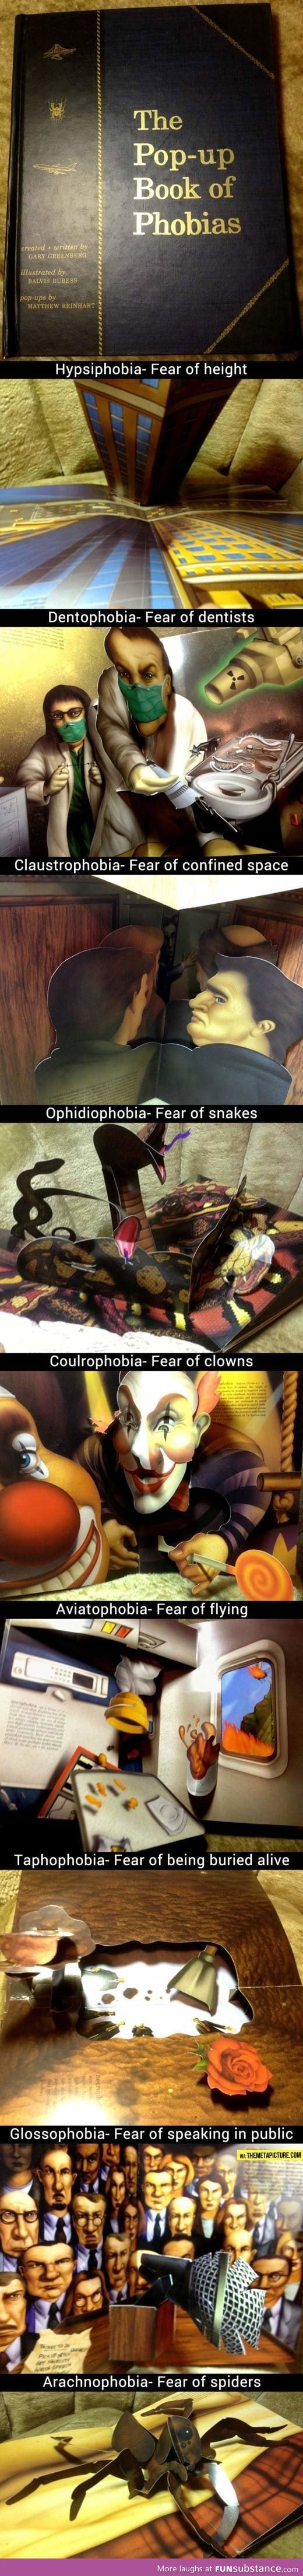 Popup book of phobias